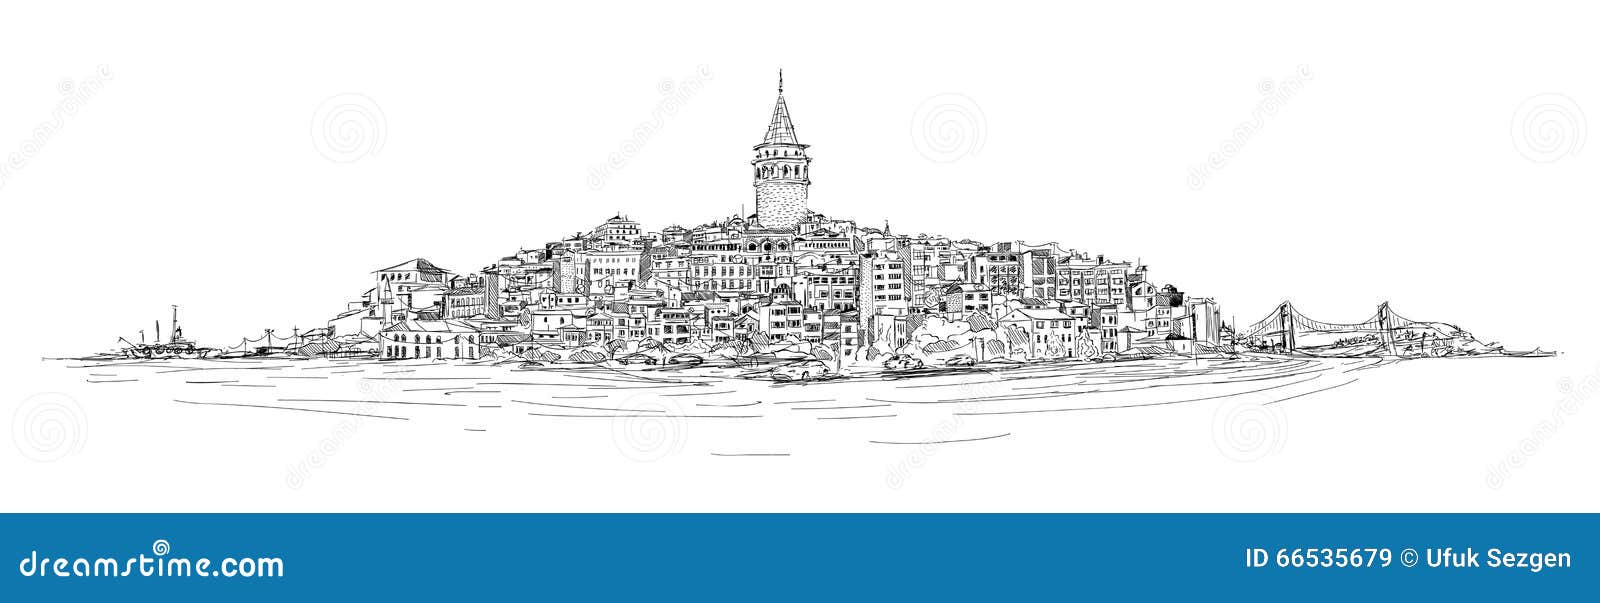 galata tower - istanbul